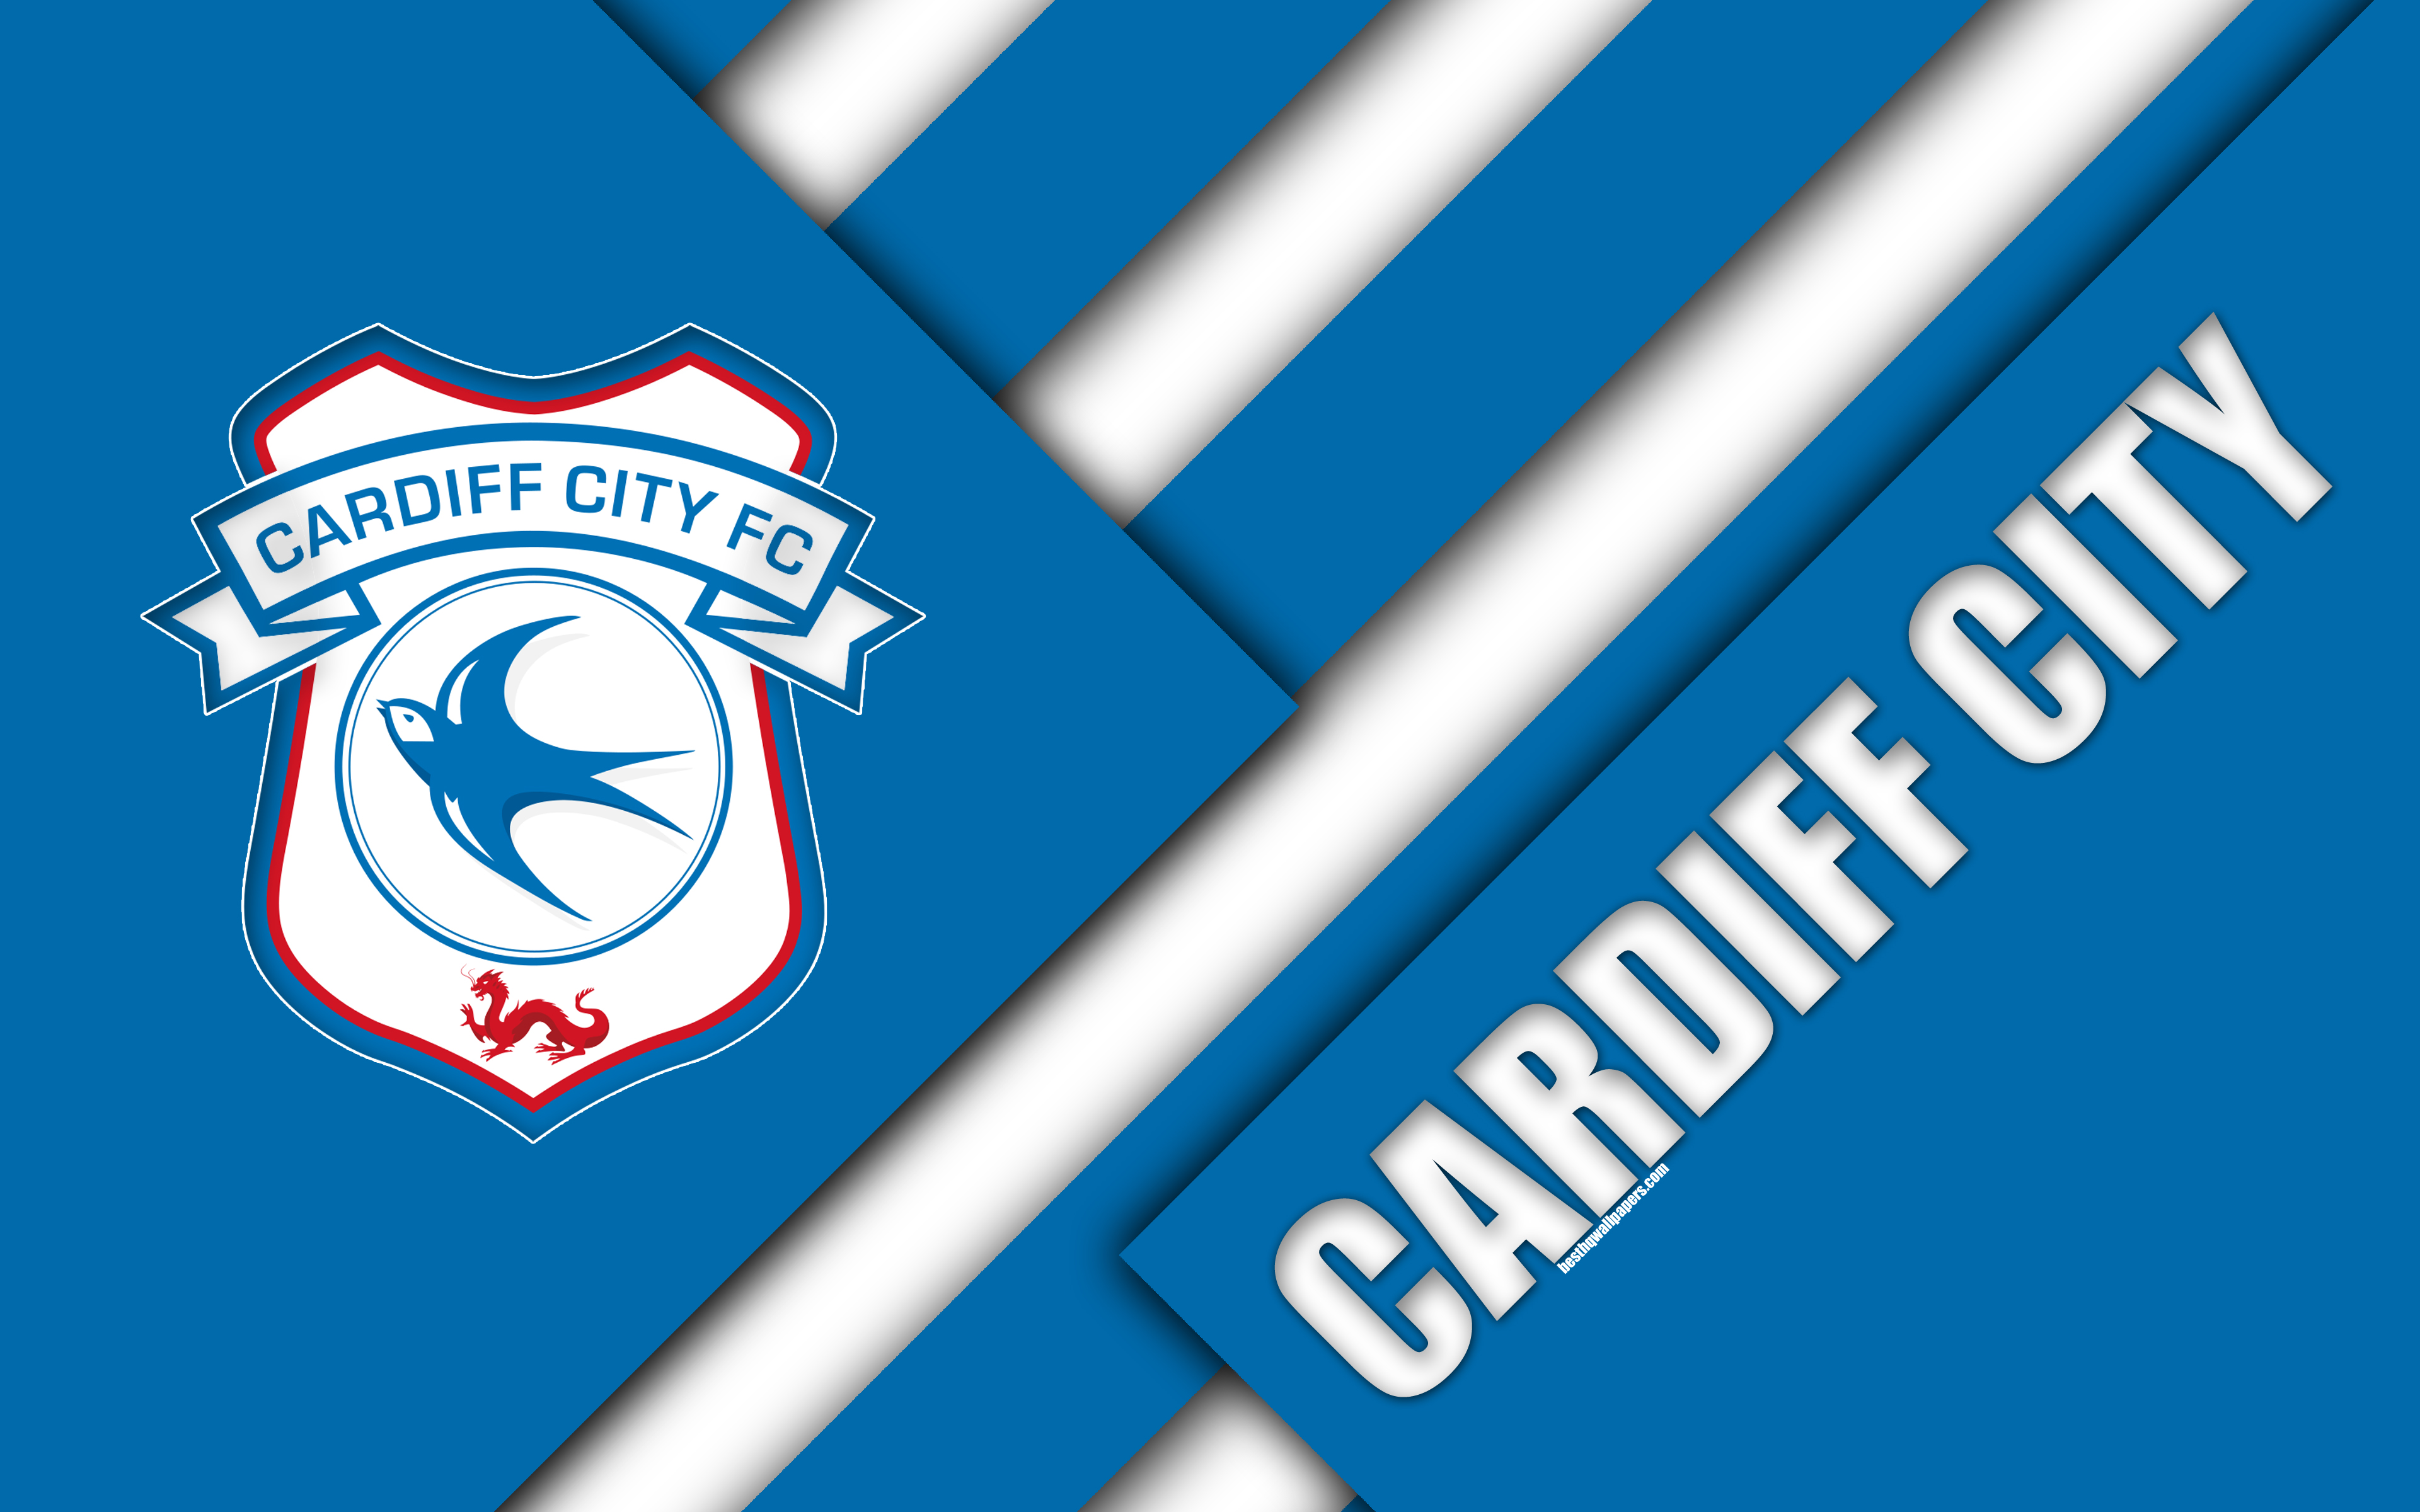 Download wallpaper Cardiff City FC, logo, 4k, blue white